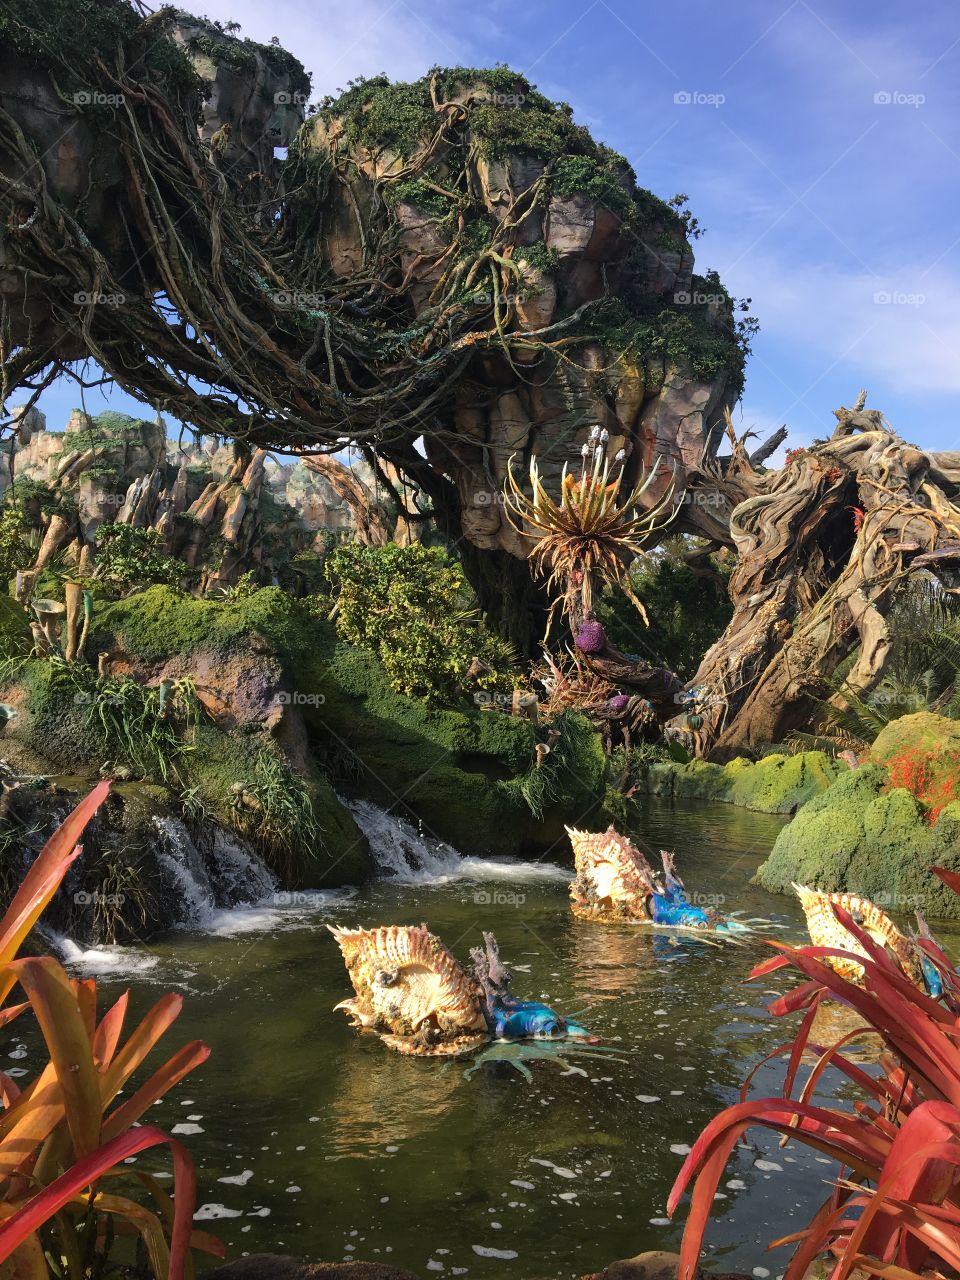 Pandora is stunning! Well done Disney 👍🏻